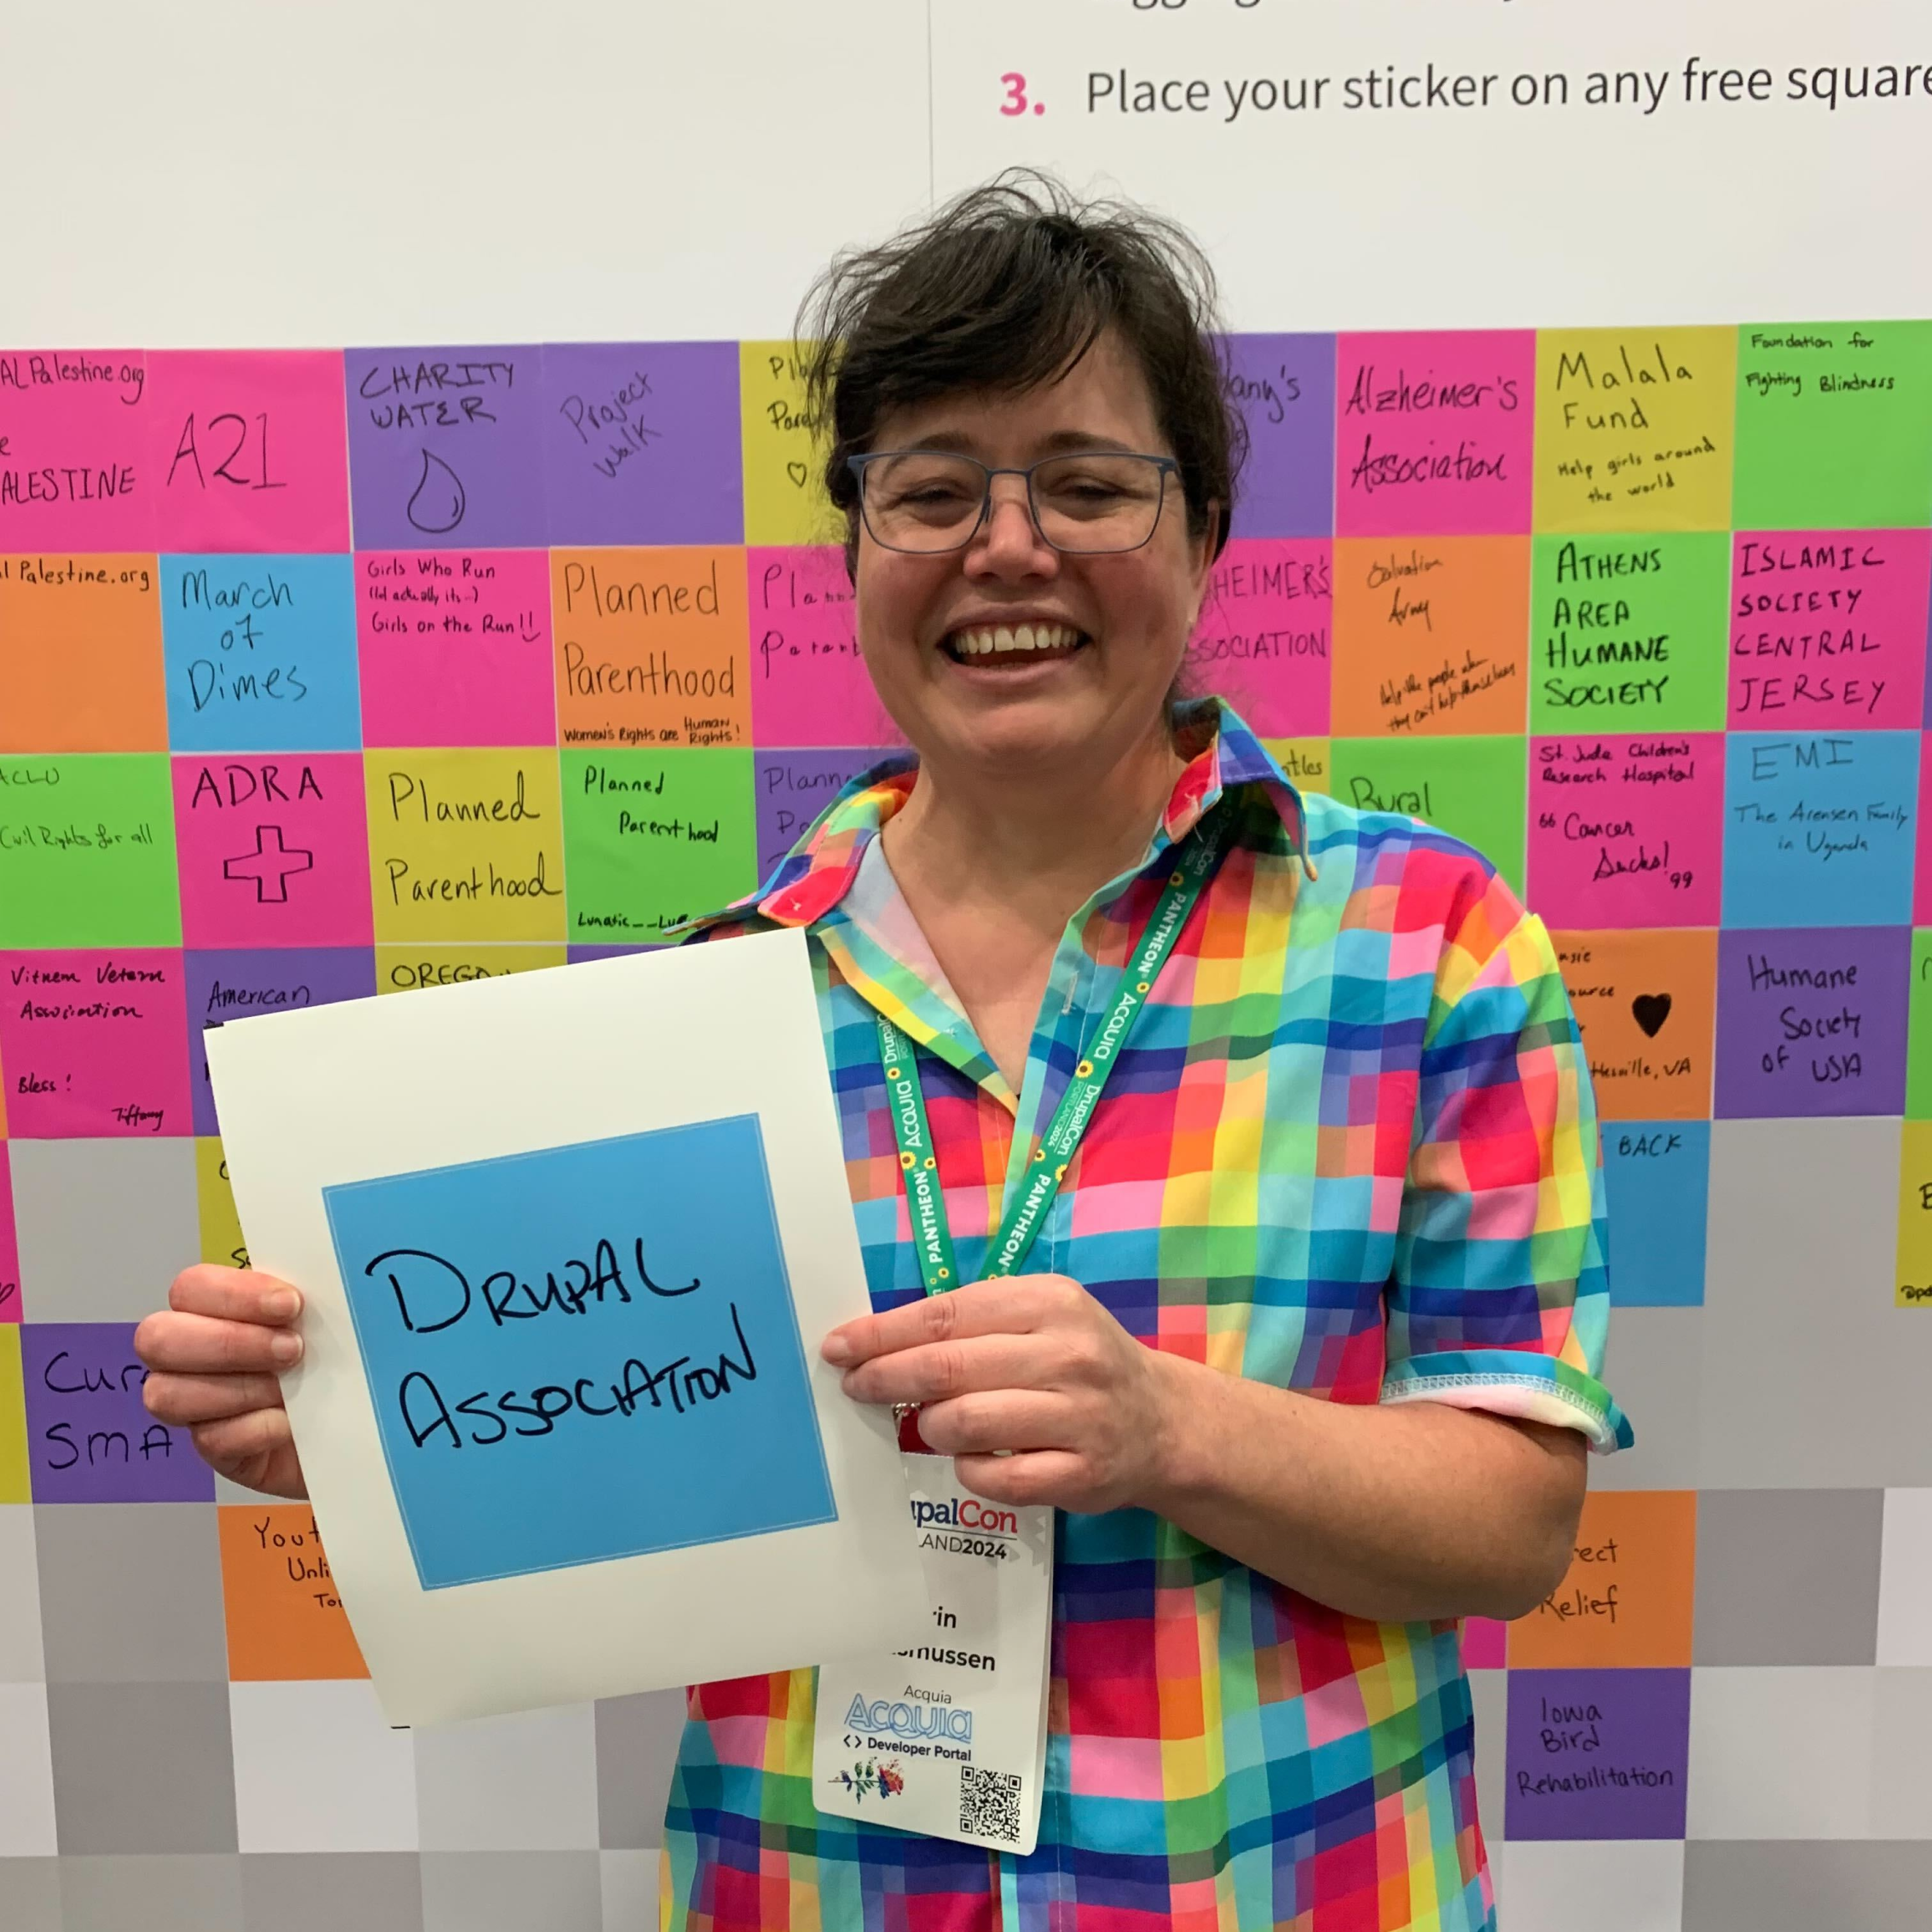 Erin Rasmussen holds a blue square sticker with "Drupal Association" written on it.